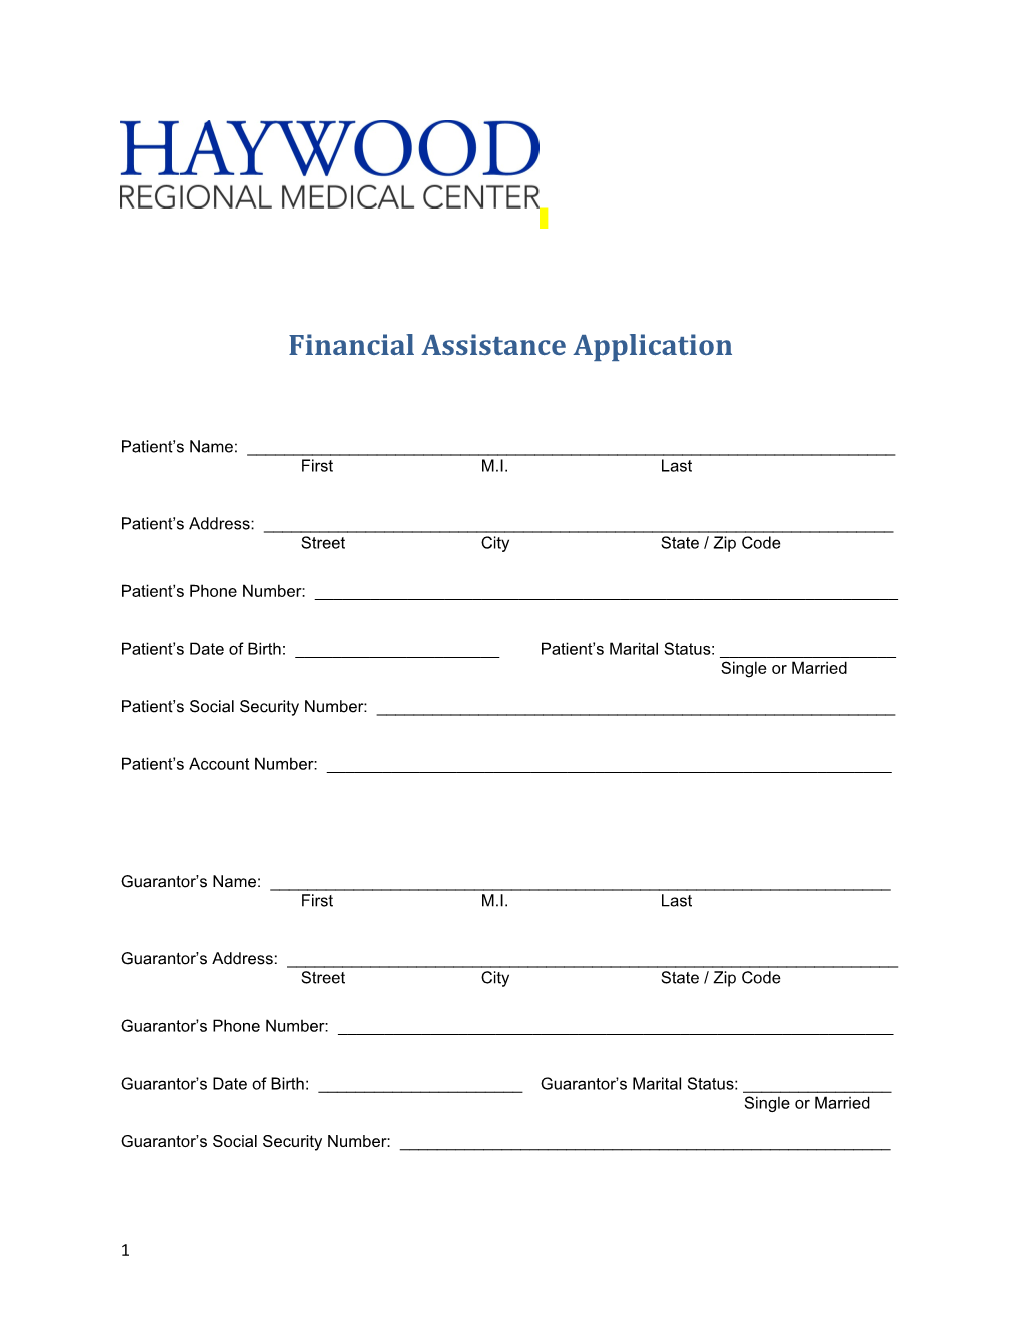 Financial Assistance Application